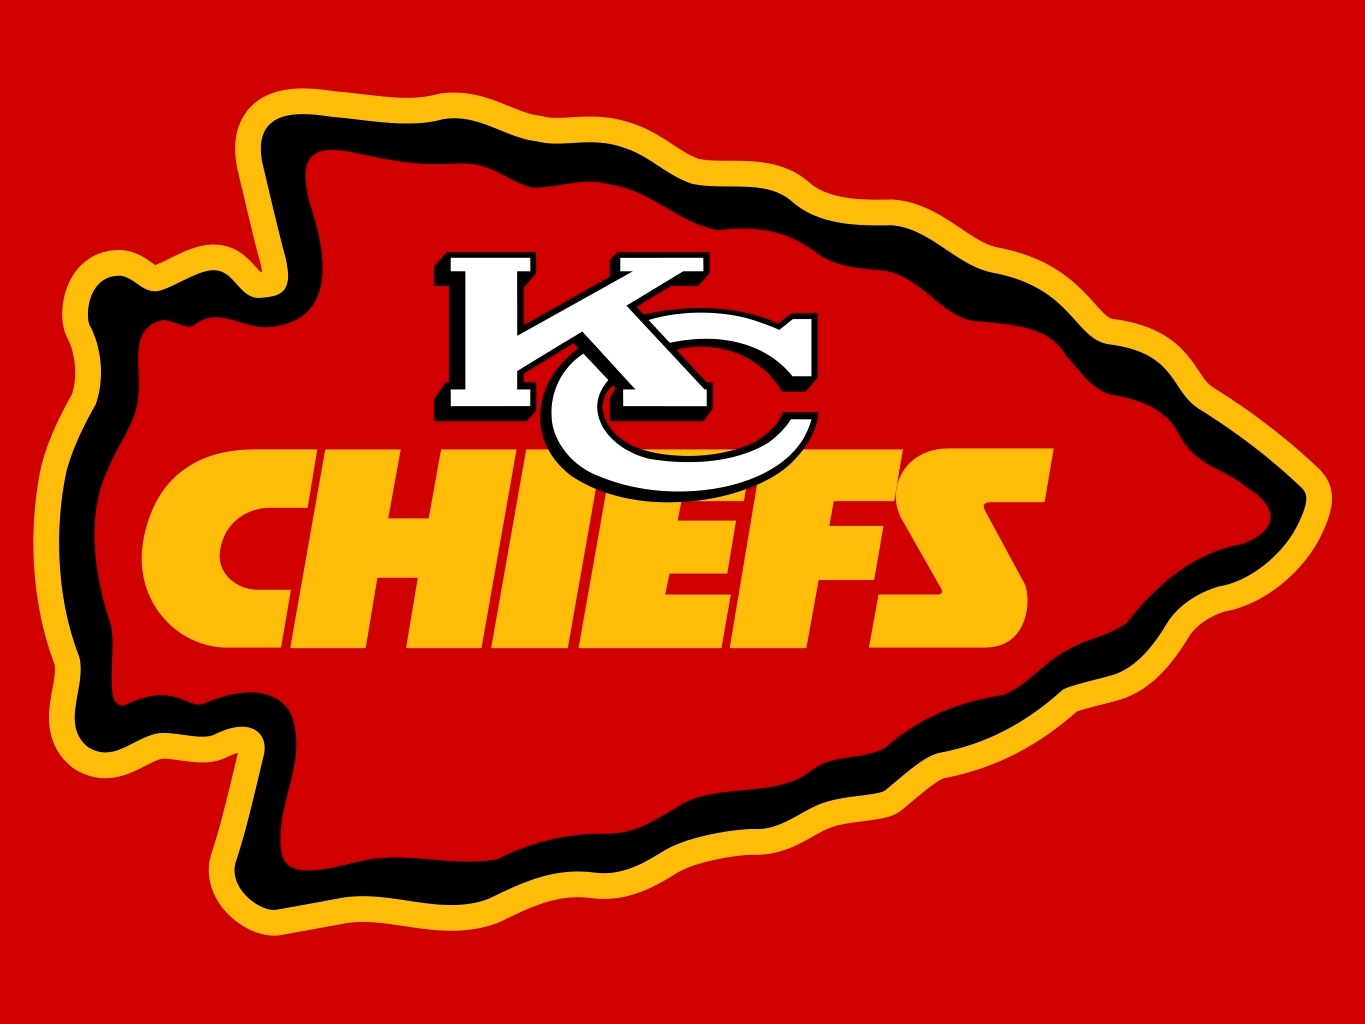 Kansas City Chiefs Backgrounds on Wallpapers Vista